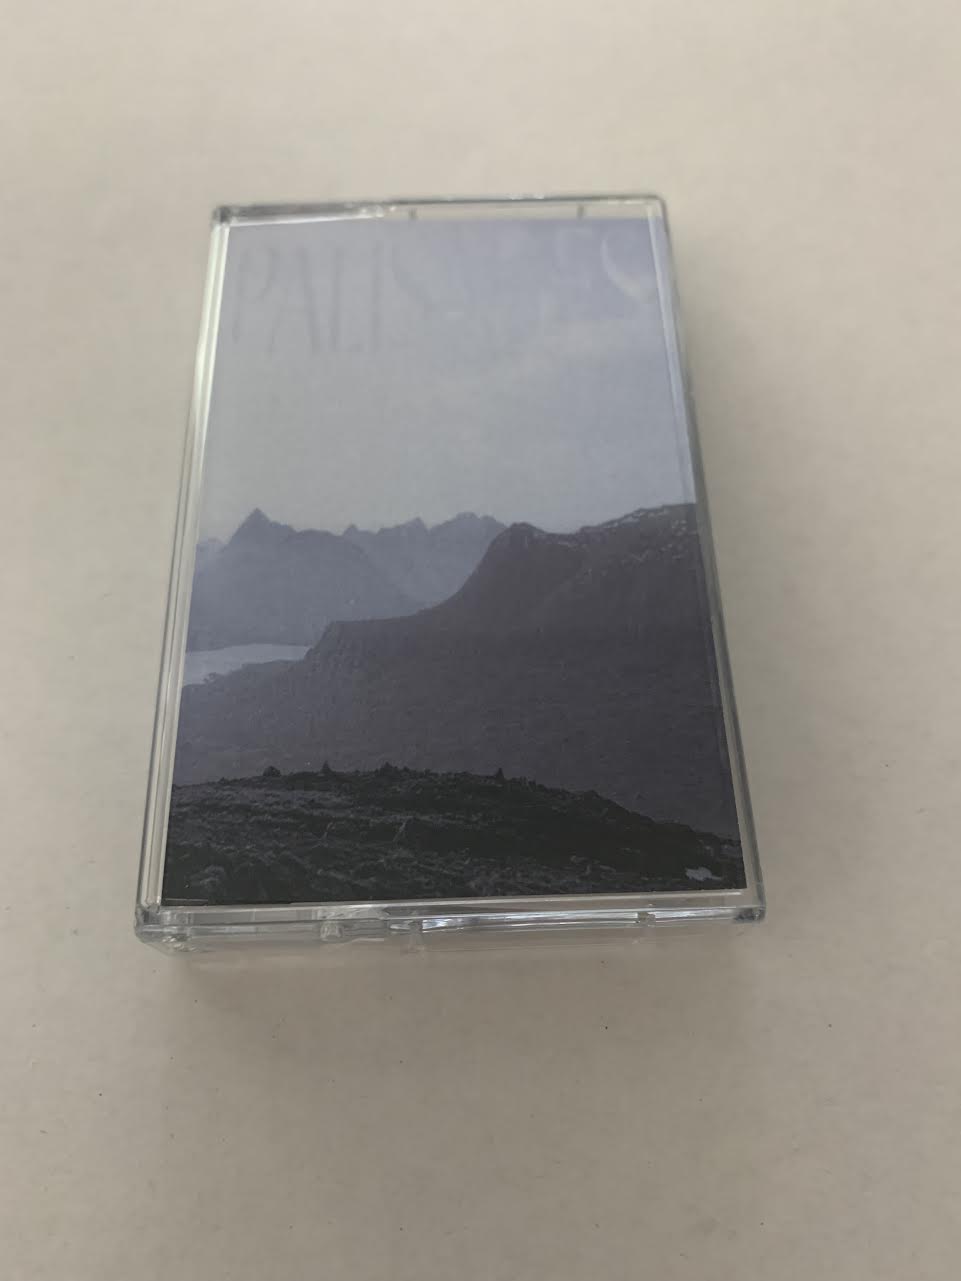 Manuka - Palisades [Glitch Ambient] (Mystic Timbre - Tape - 8/4/20)